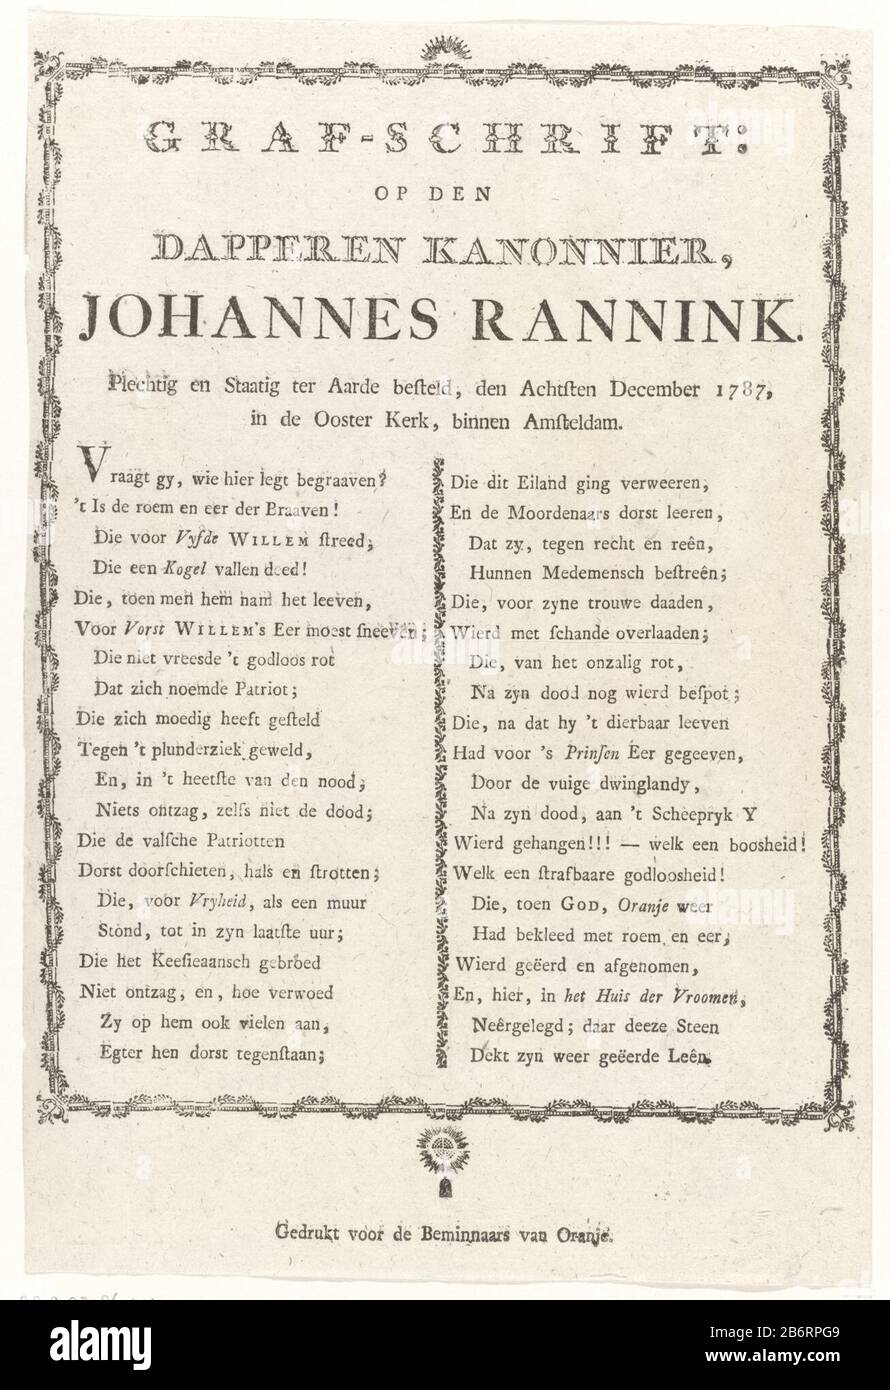 Grafschift voor Johannes Rannink, 1747 Graf-schrift op den dapperen  kanonnier Johannes Rannink (titel op object) Leaf with an epitaph for John  Rannink, leader of the hatchets, the rebellious Orangist Amsterdam  shipwrights who